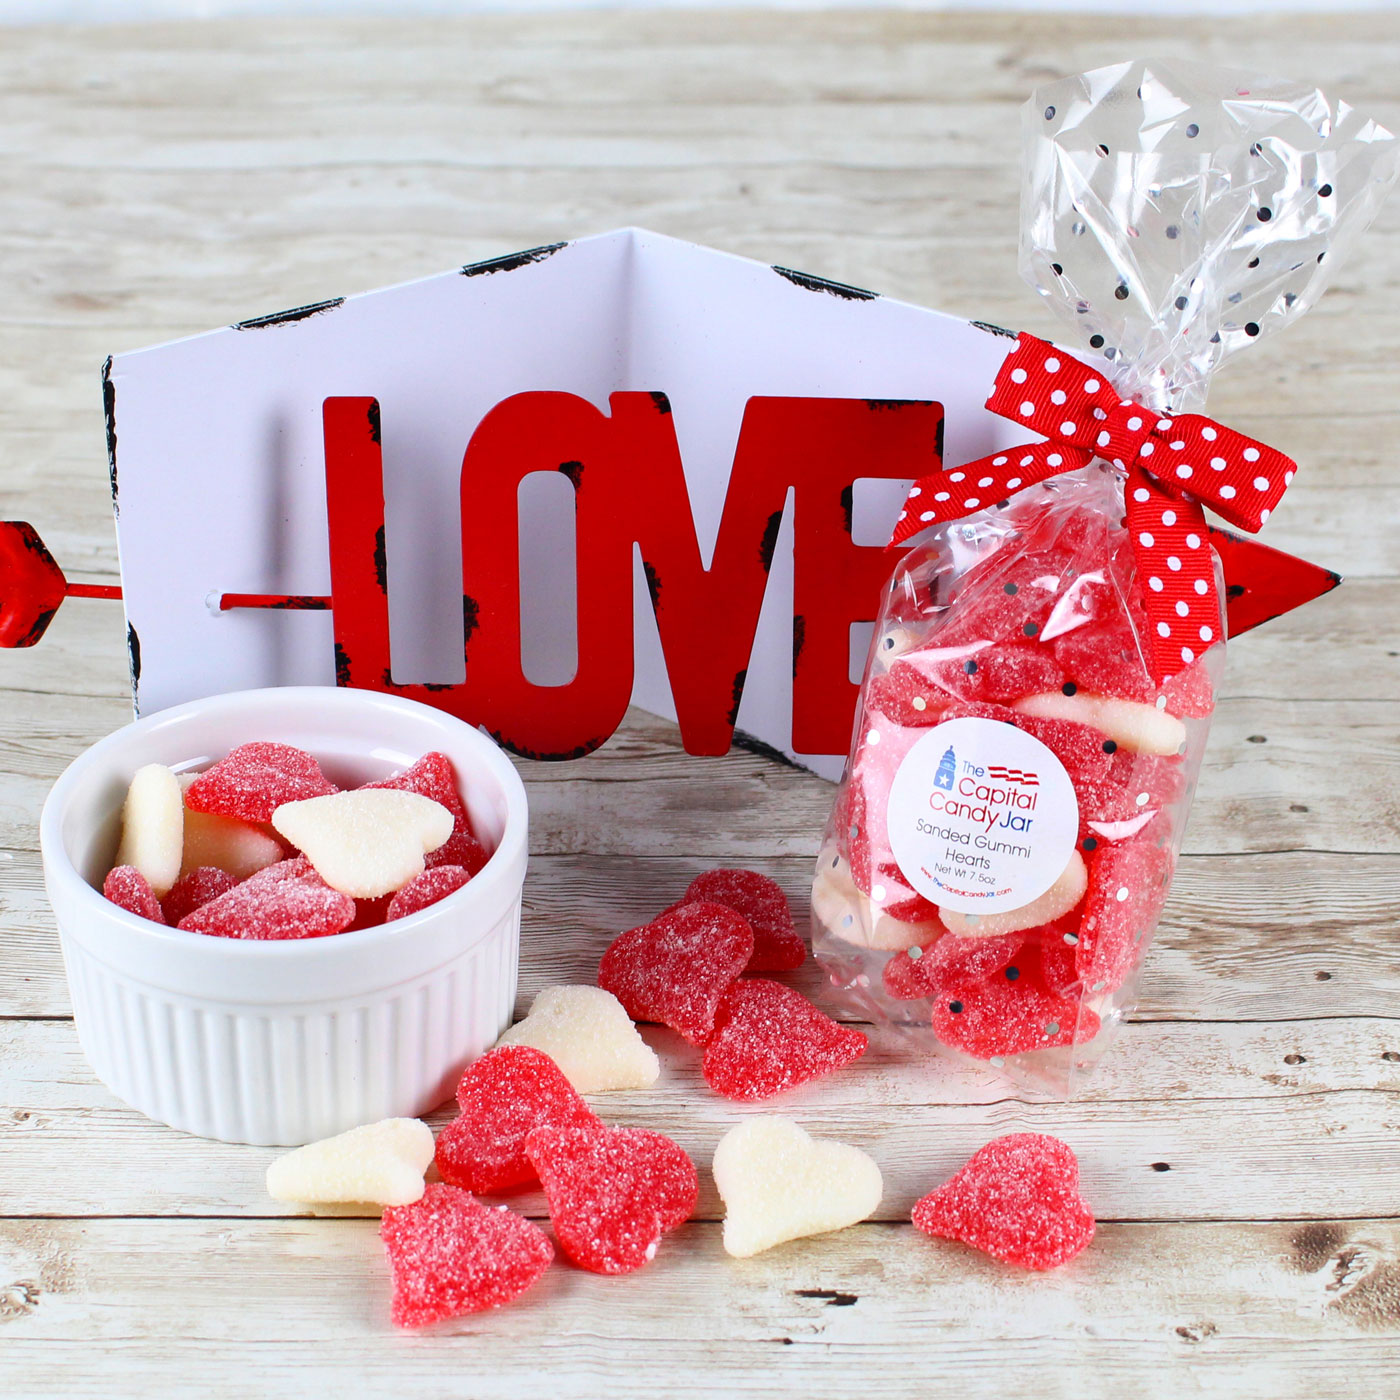 Destination Holiday Valentine's Day XOXO Plastic Candy Jar - Shop